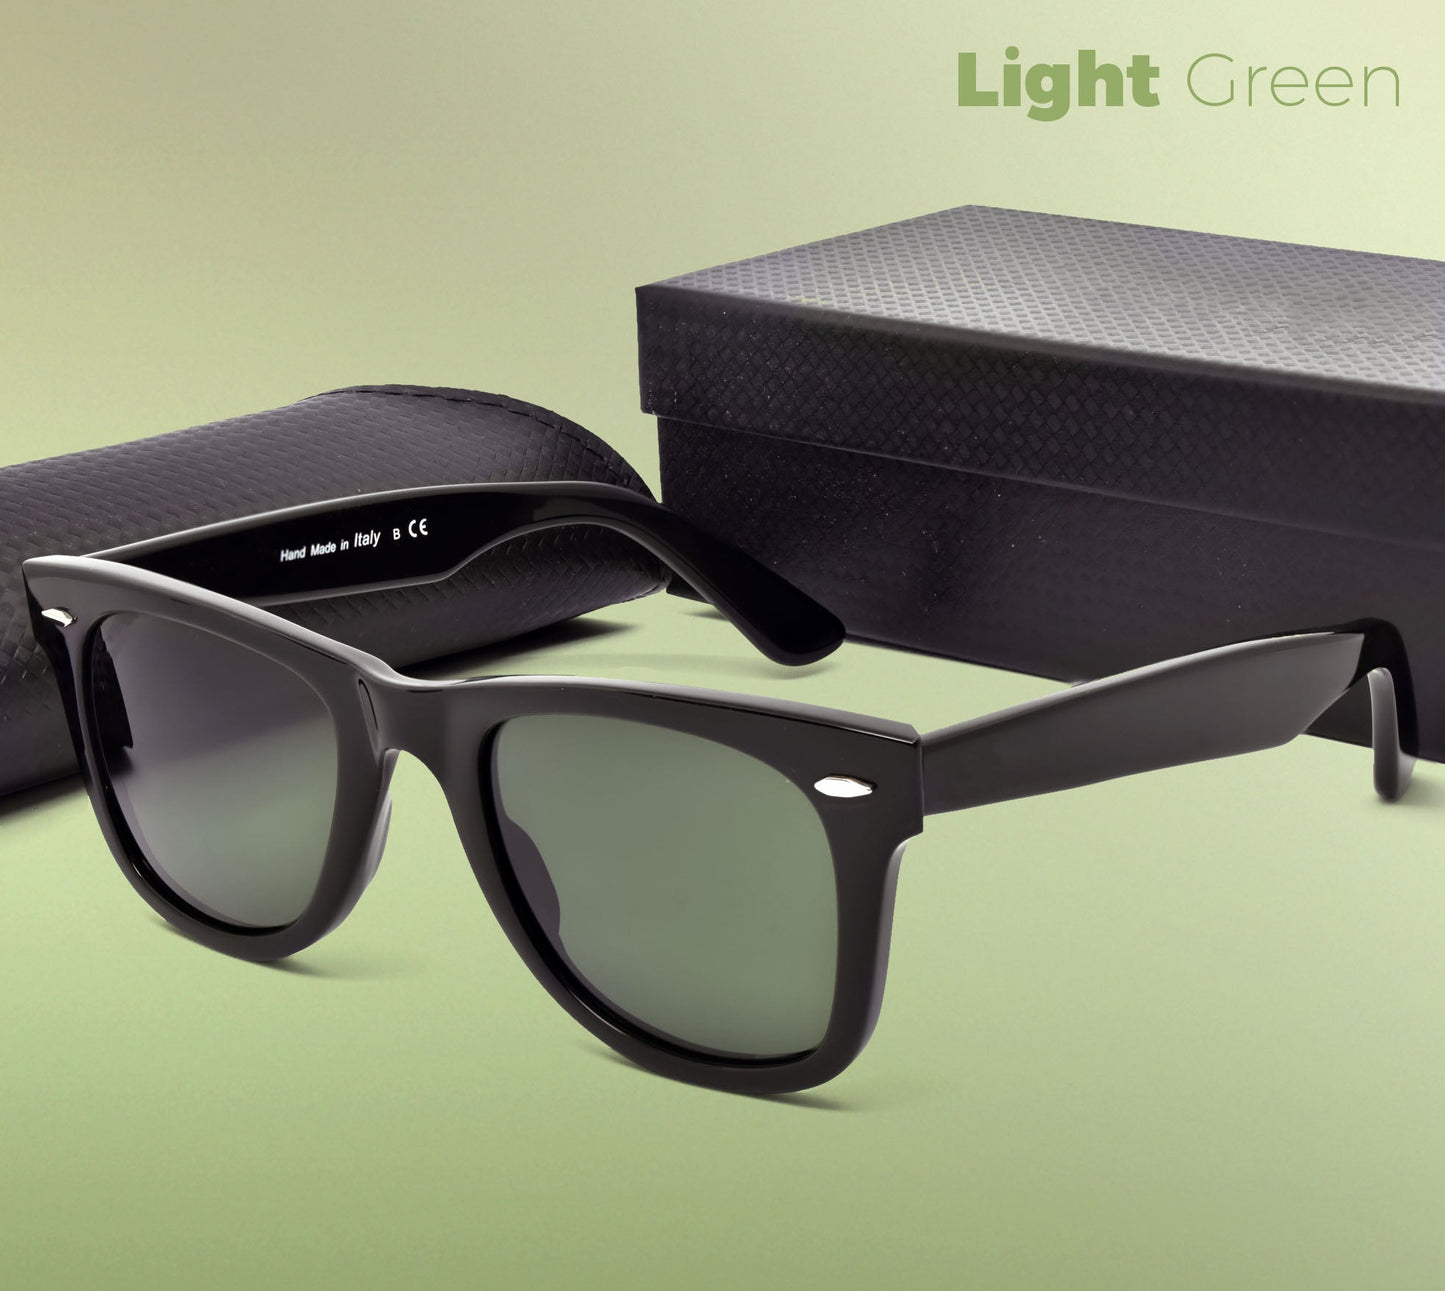 RB Sunglass for Men | RB 14 Light Green | Premium Quality | Exclusive Sun Glass